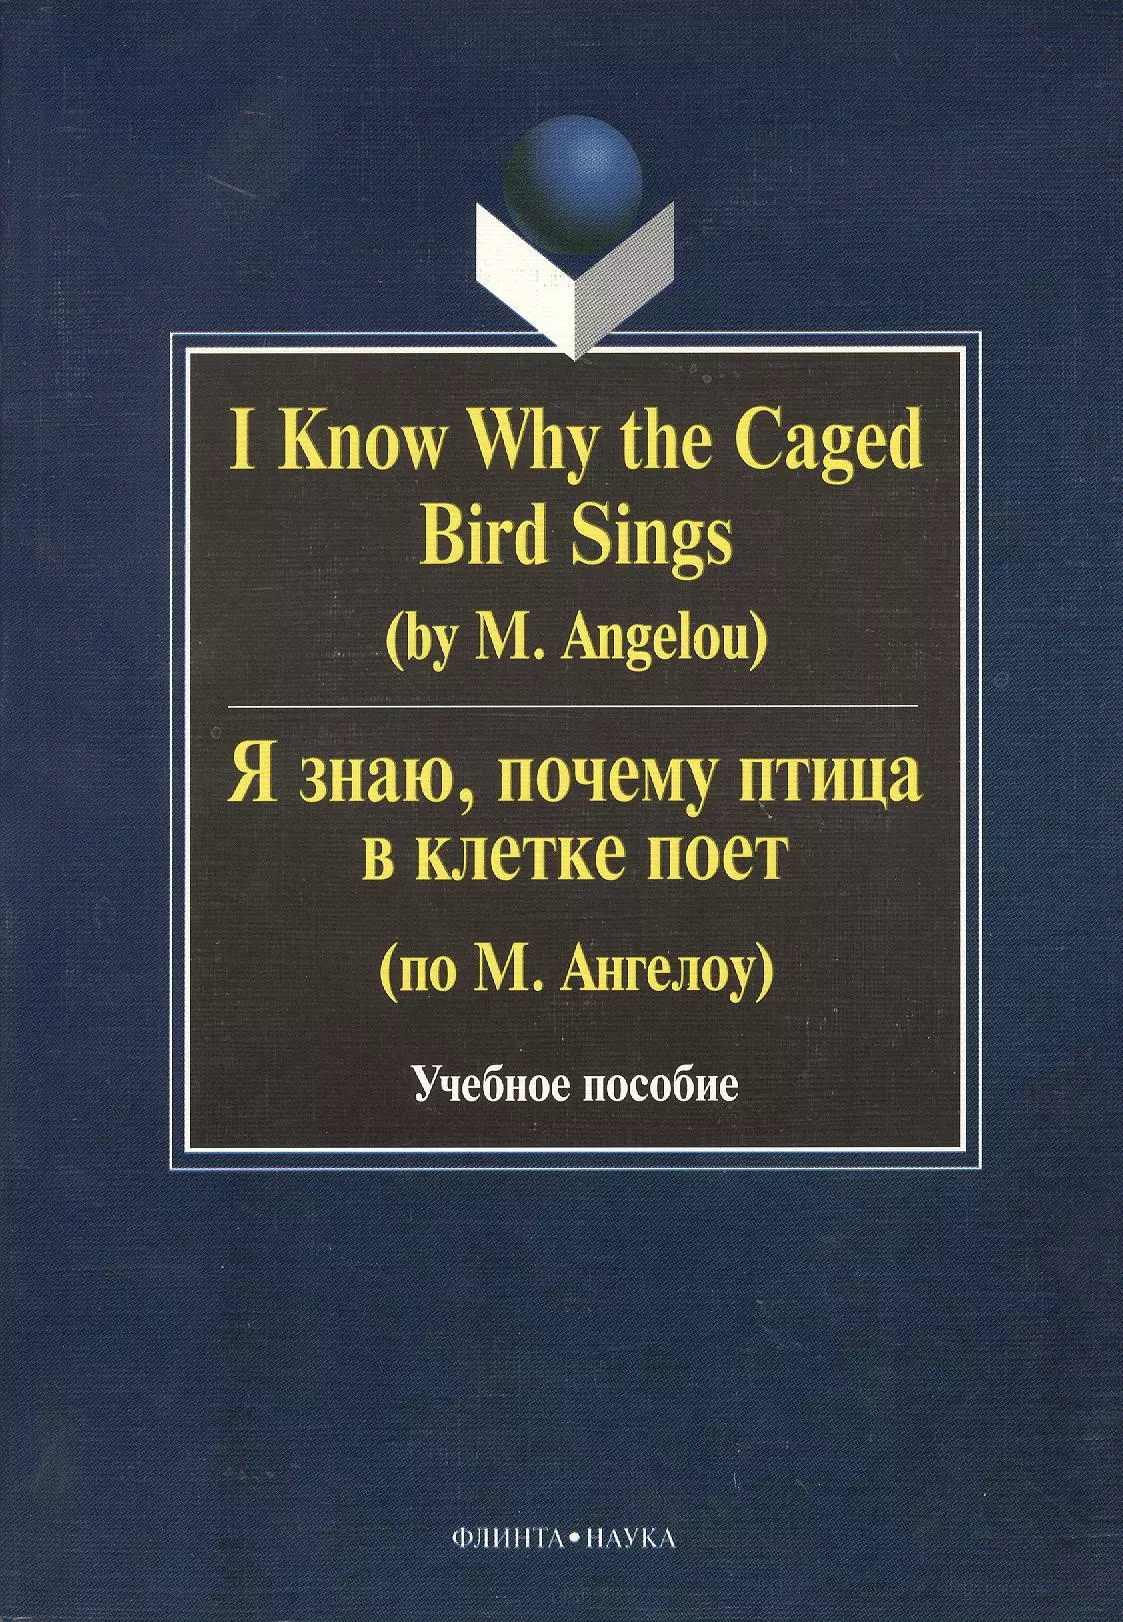 I Know Why the Caged Bird Sings ( by M. Angelou) Я знаю почему птица в клетке поет ( по М. Ангелоу): Учеб пособие / Бабич Г.Н. angelou maya i know why caged bird sings